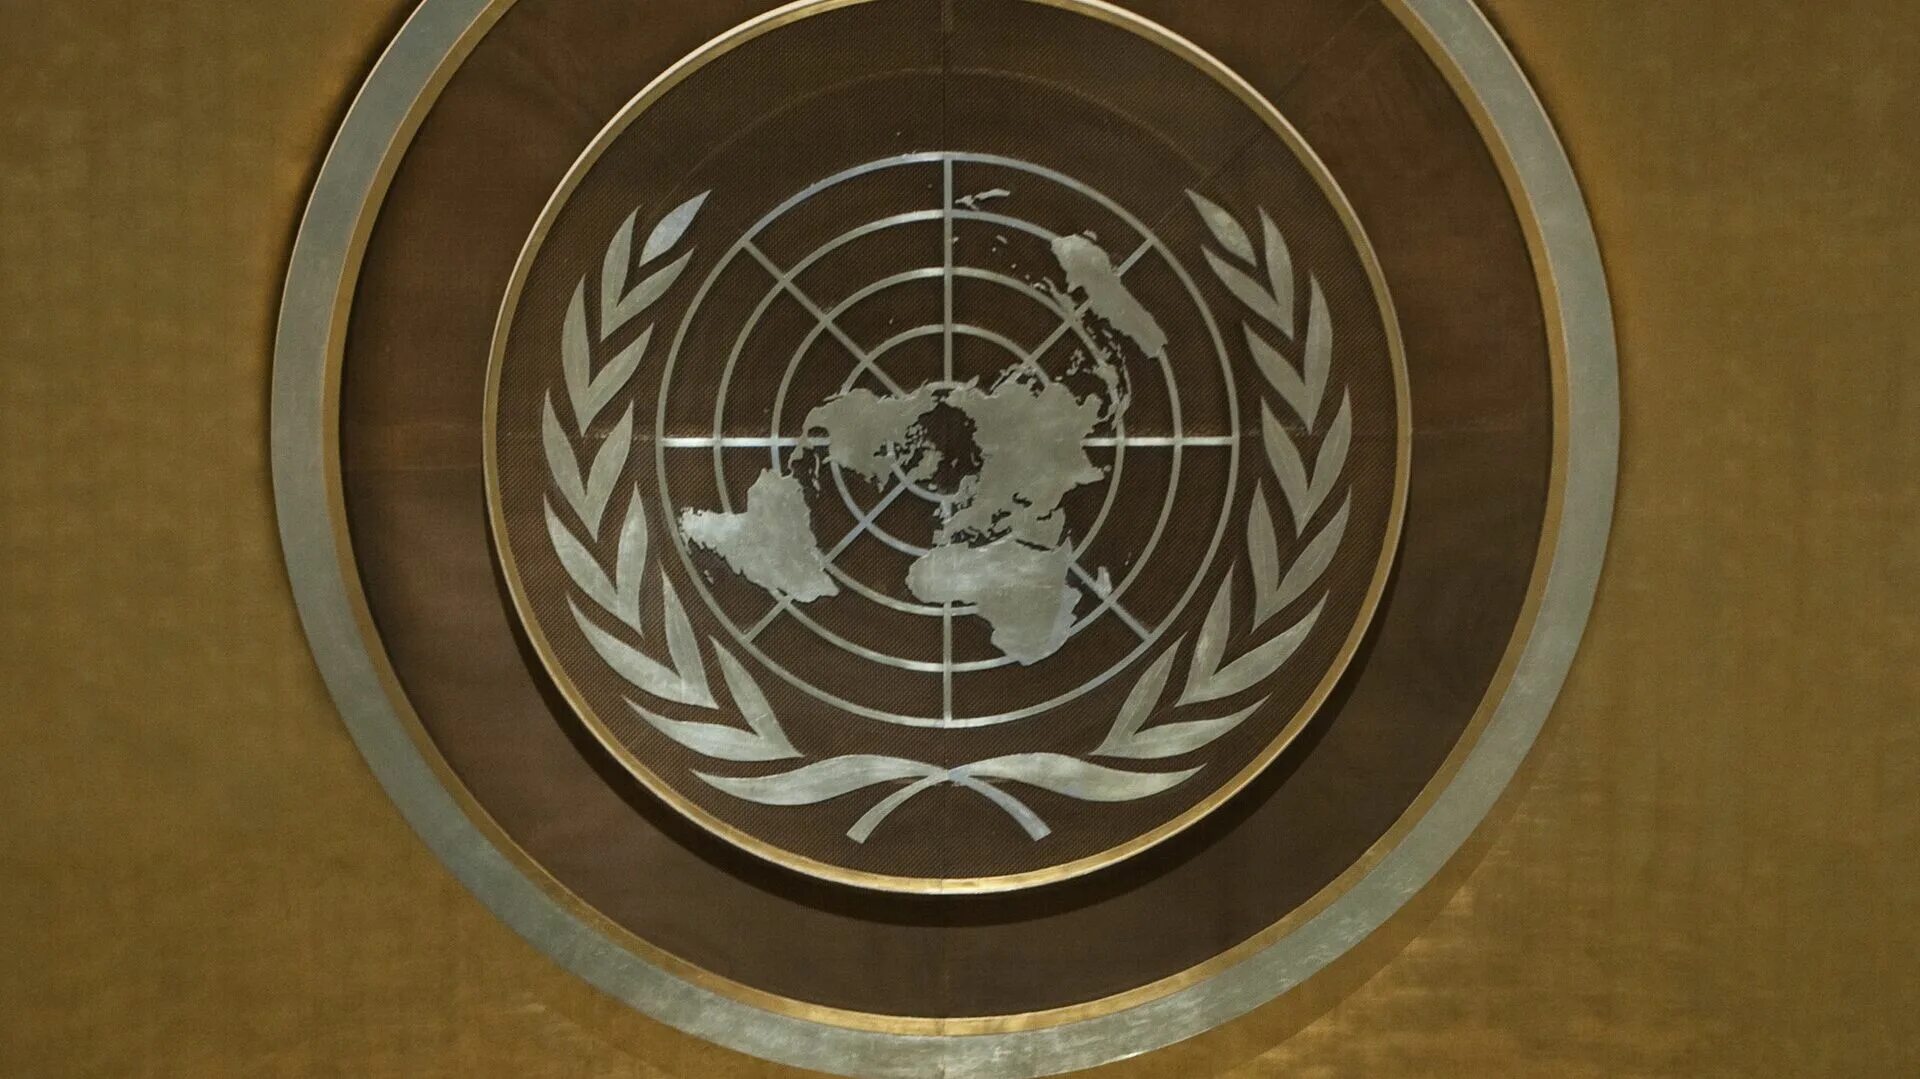 Ограничения оон. Эмблема ООН. Ассамблея ООН логотип. Герб ООН фото. Эмблема ООН на здании.